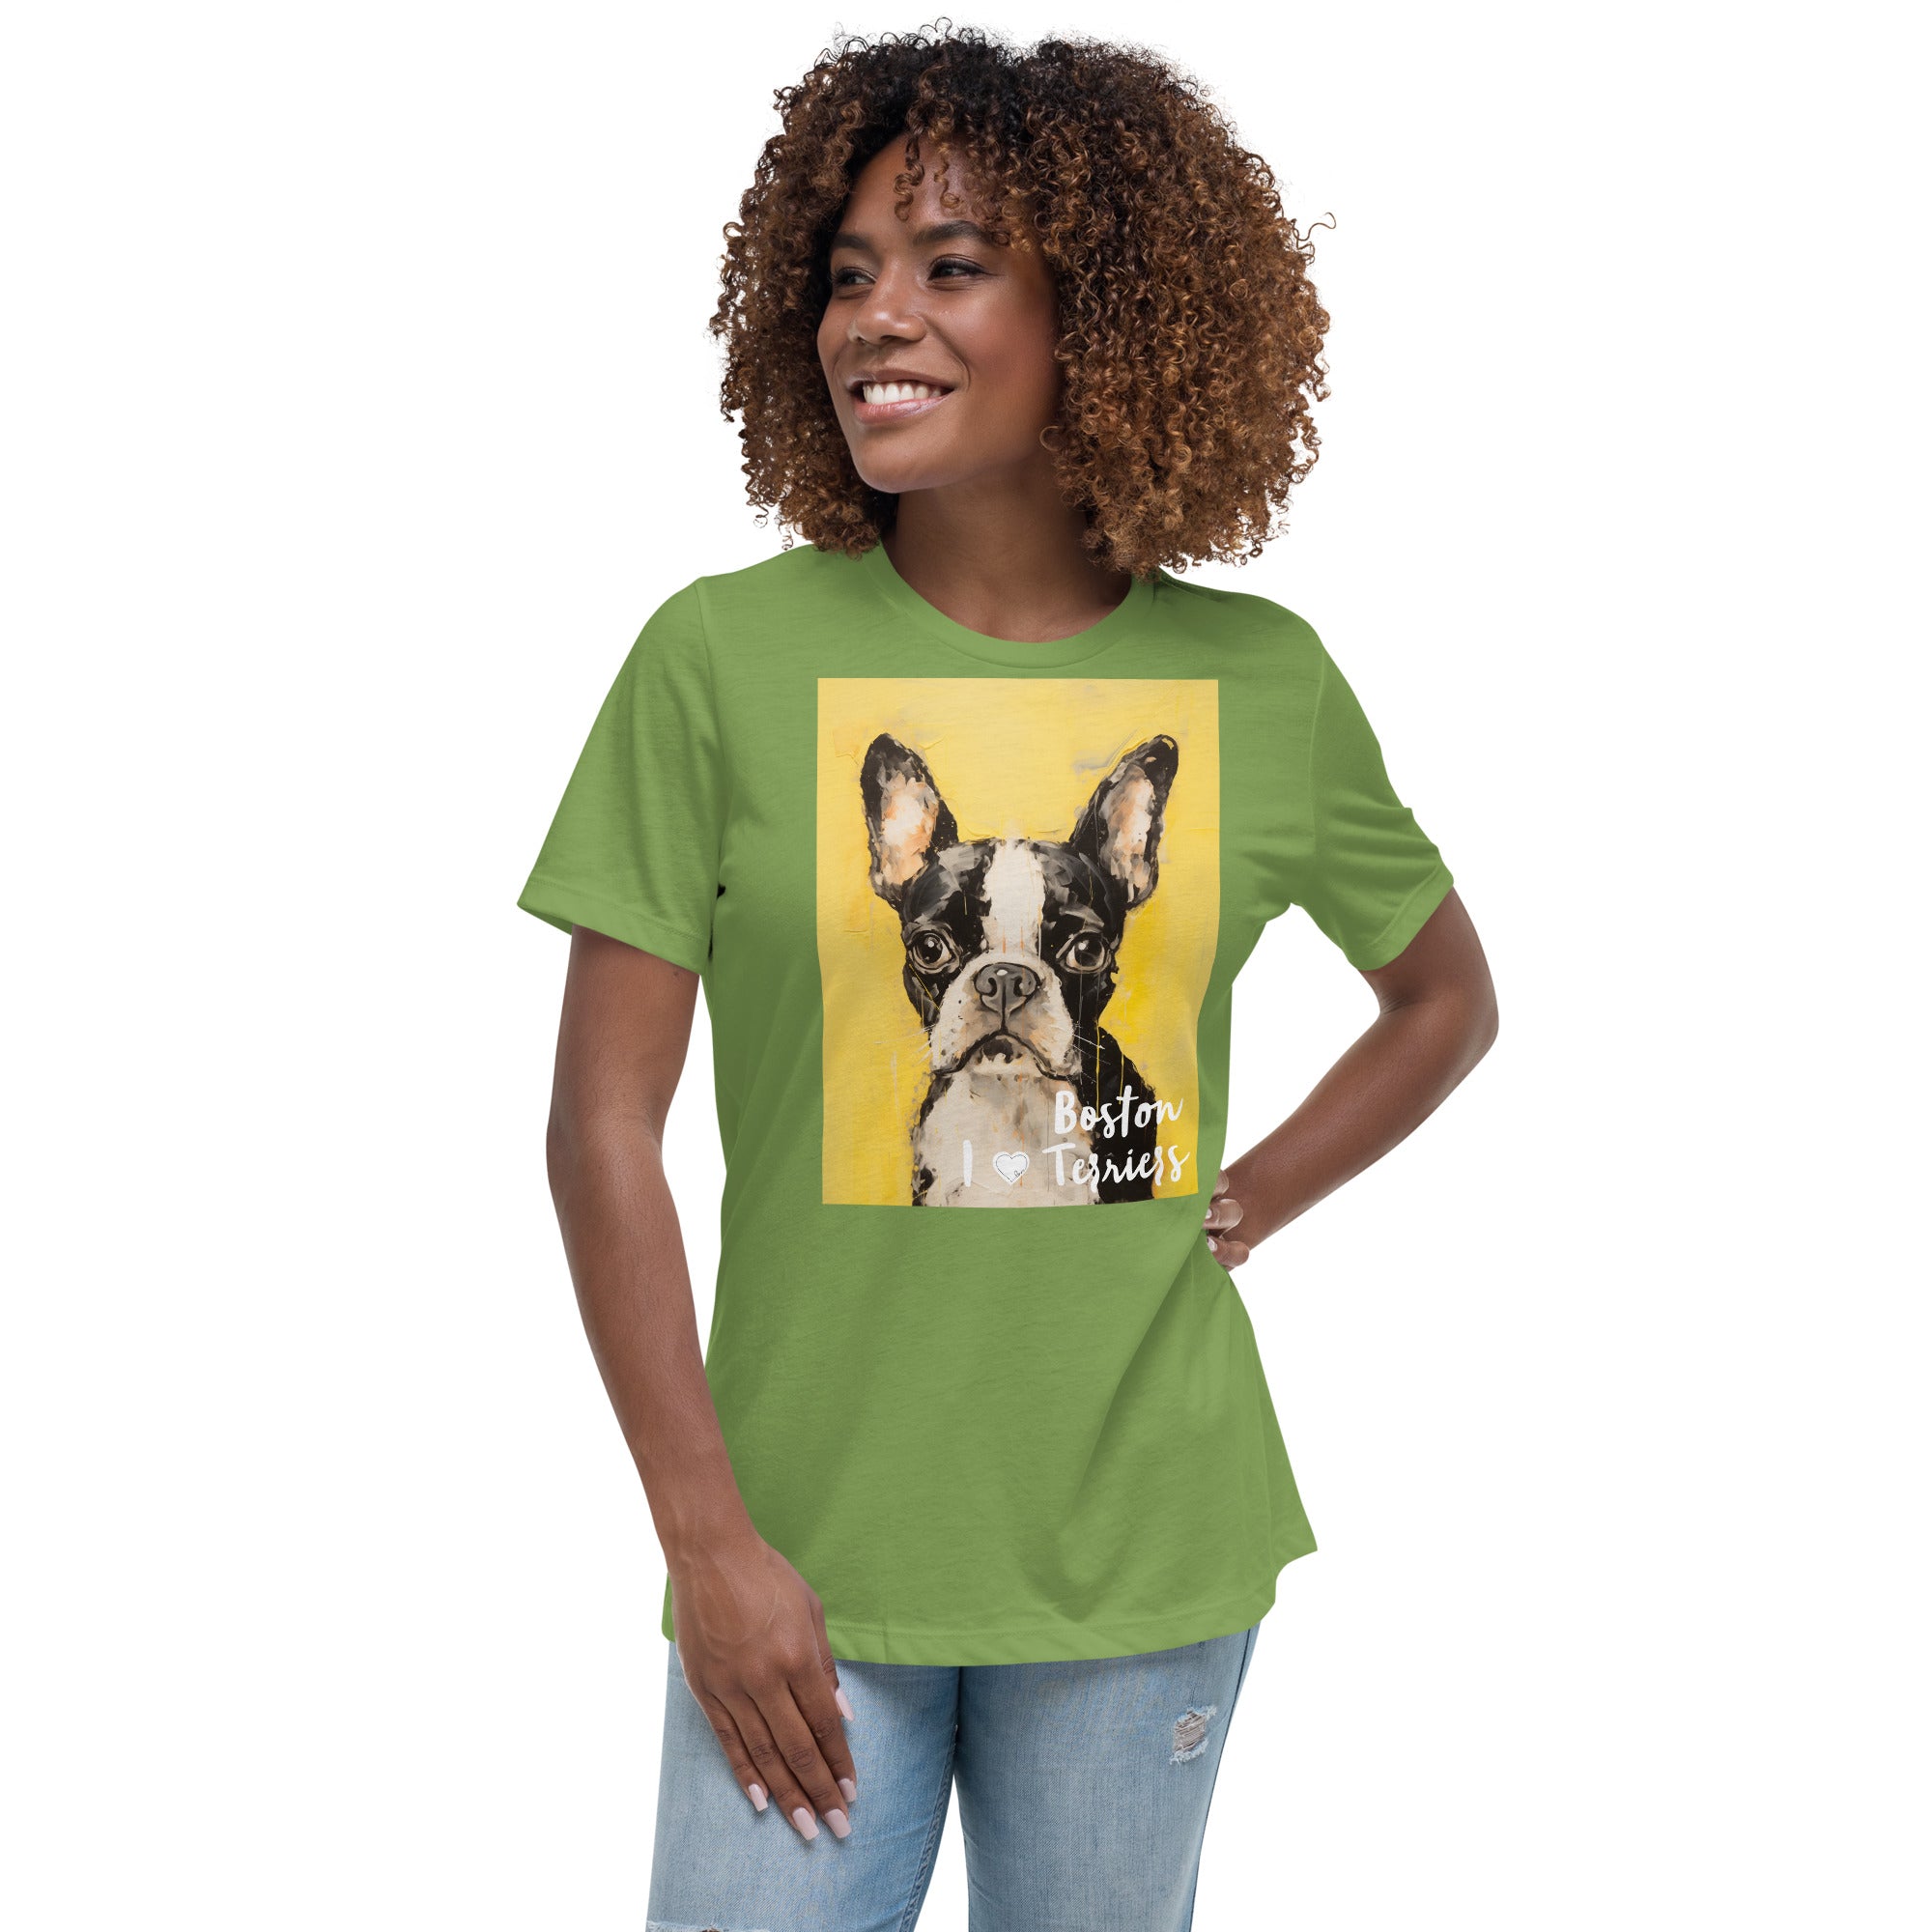 Women's Relaxed T-Shirt - I ❤ Dogs - Boston Terrier